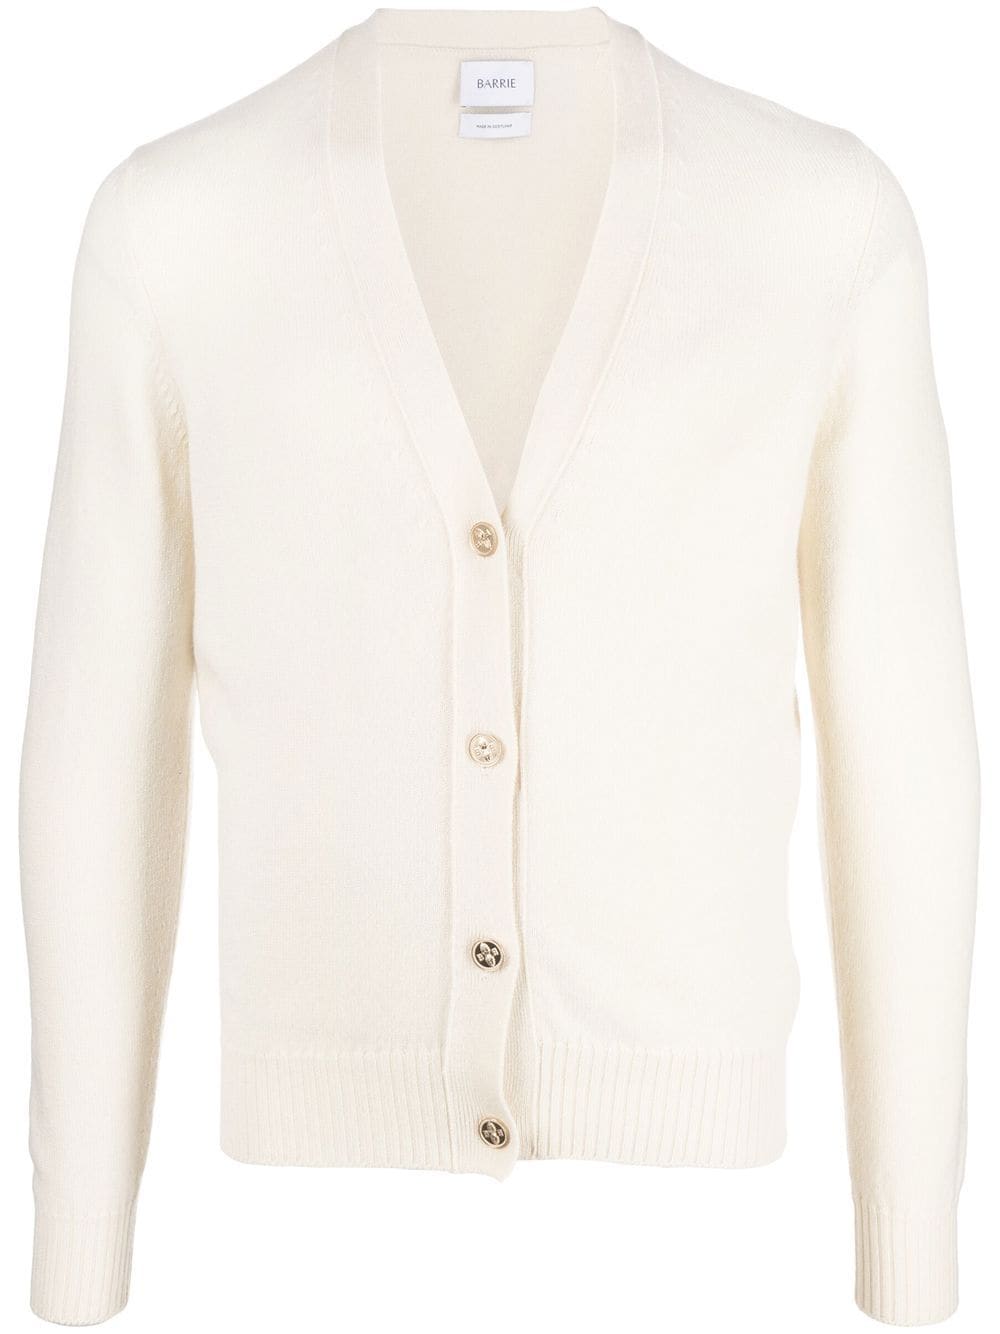 Barrie V-neck cashmere cardigan - White